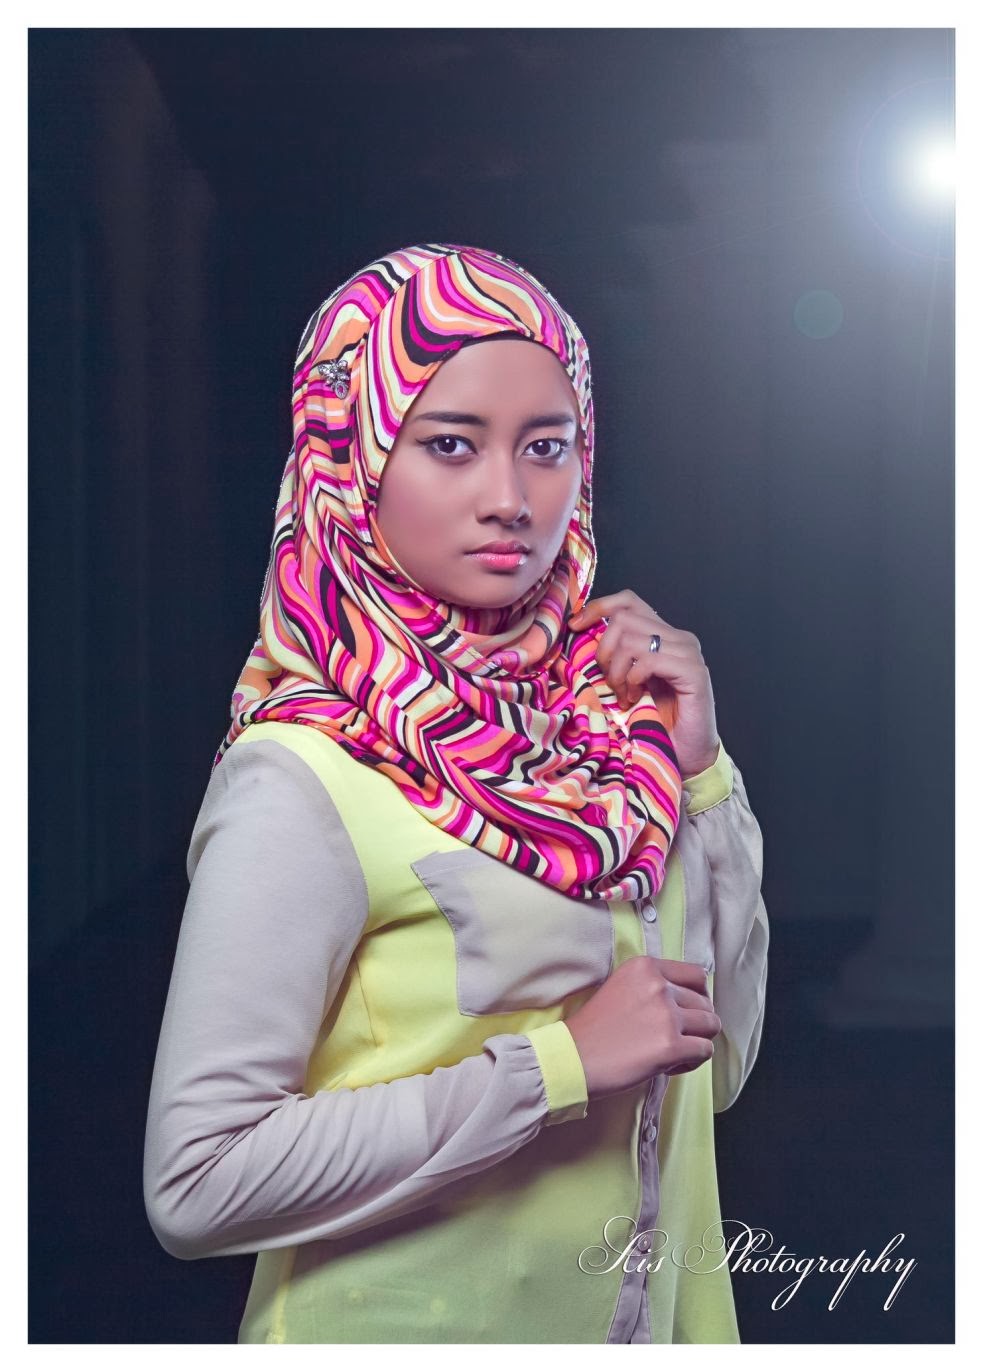 Koleksi Foto Wanita Cantik Dengan Jilbab Artikel Ilmiah